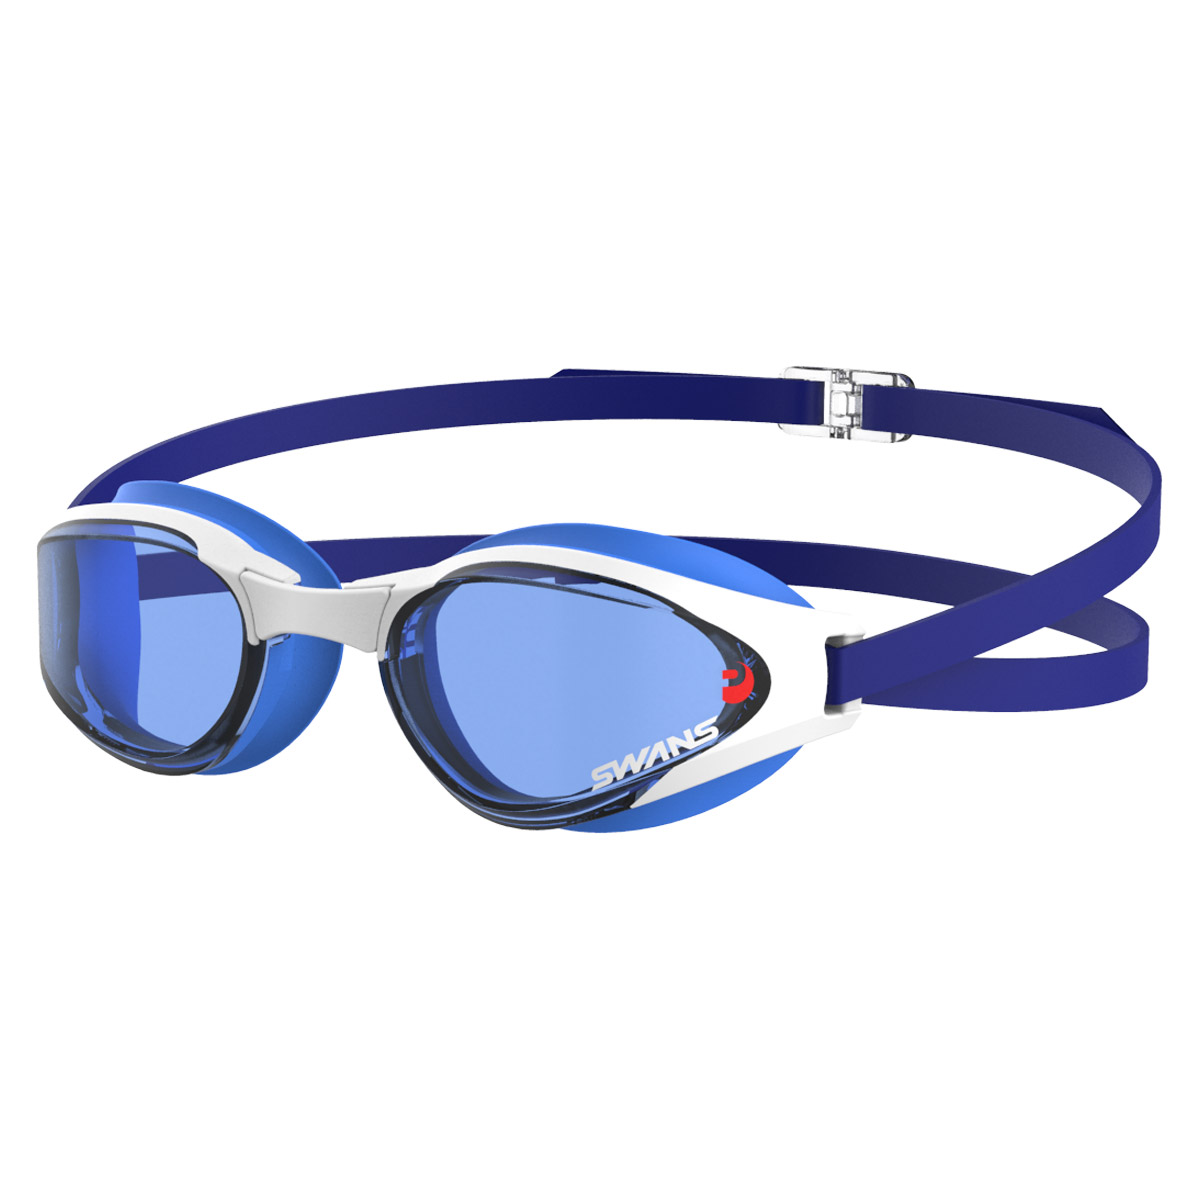 Swans SR81 Ascender Photochromatic Goggles - Blue